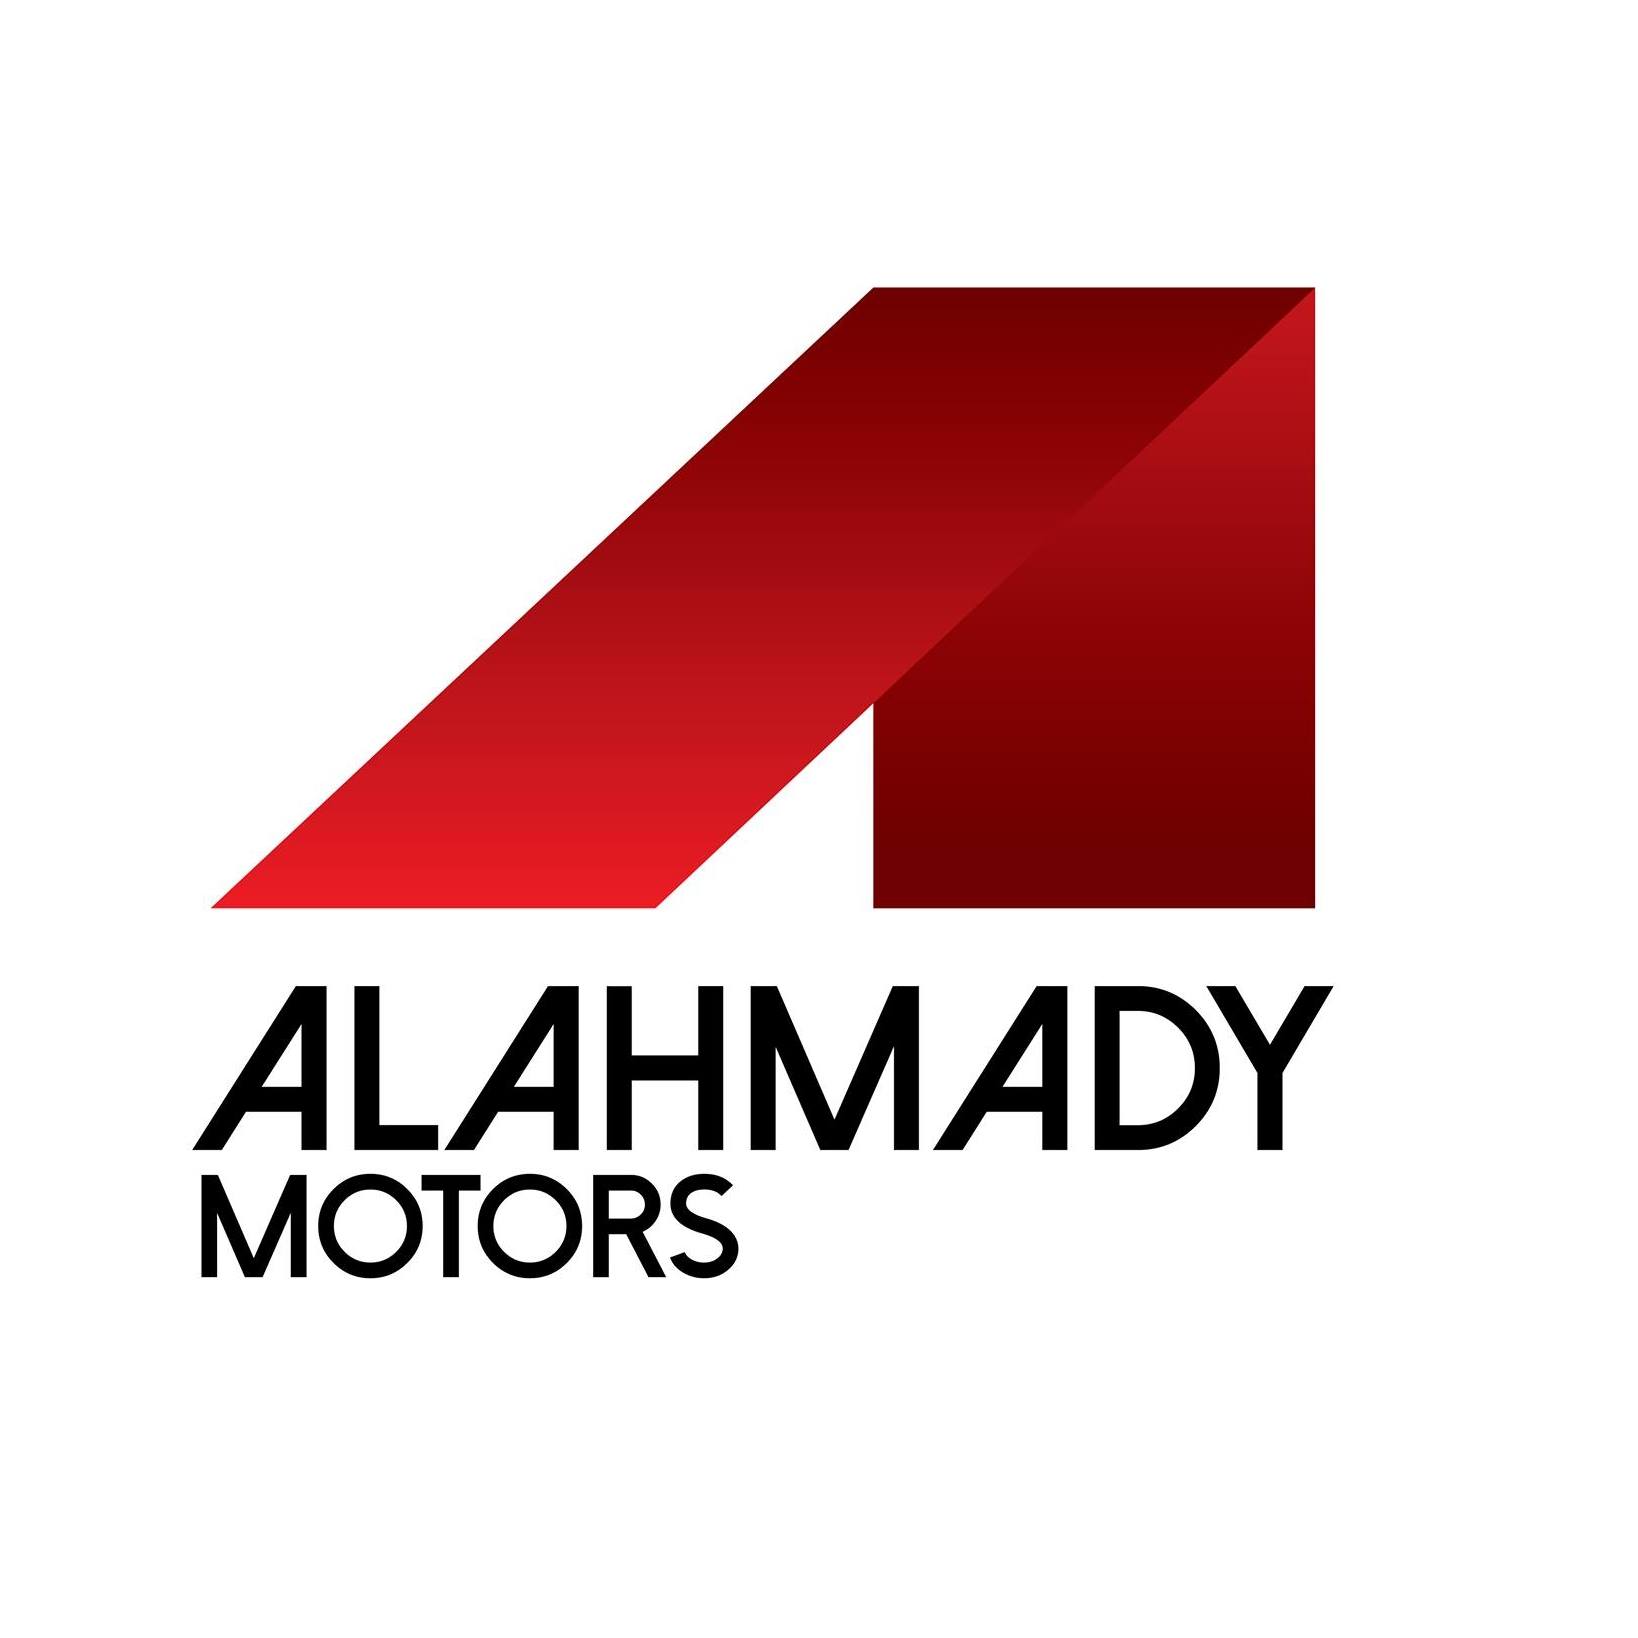 Alahmady Motors